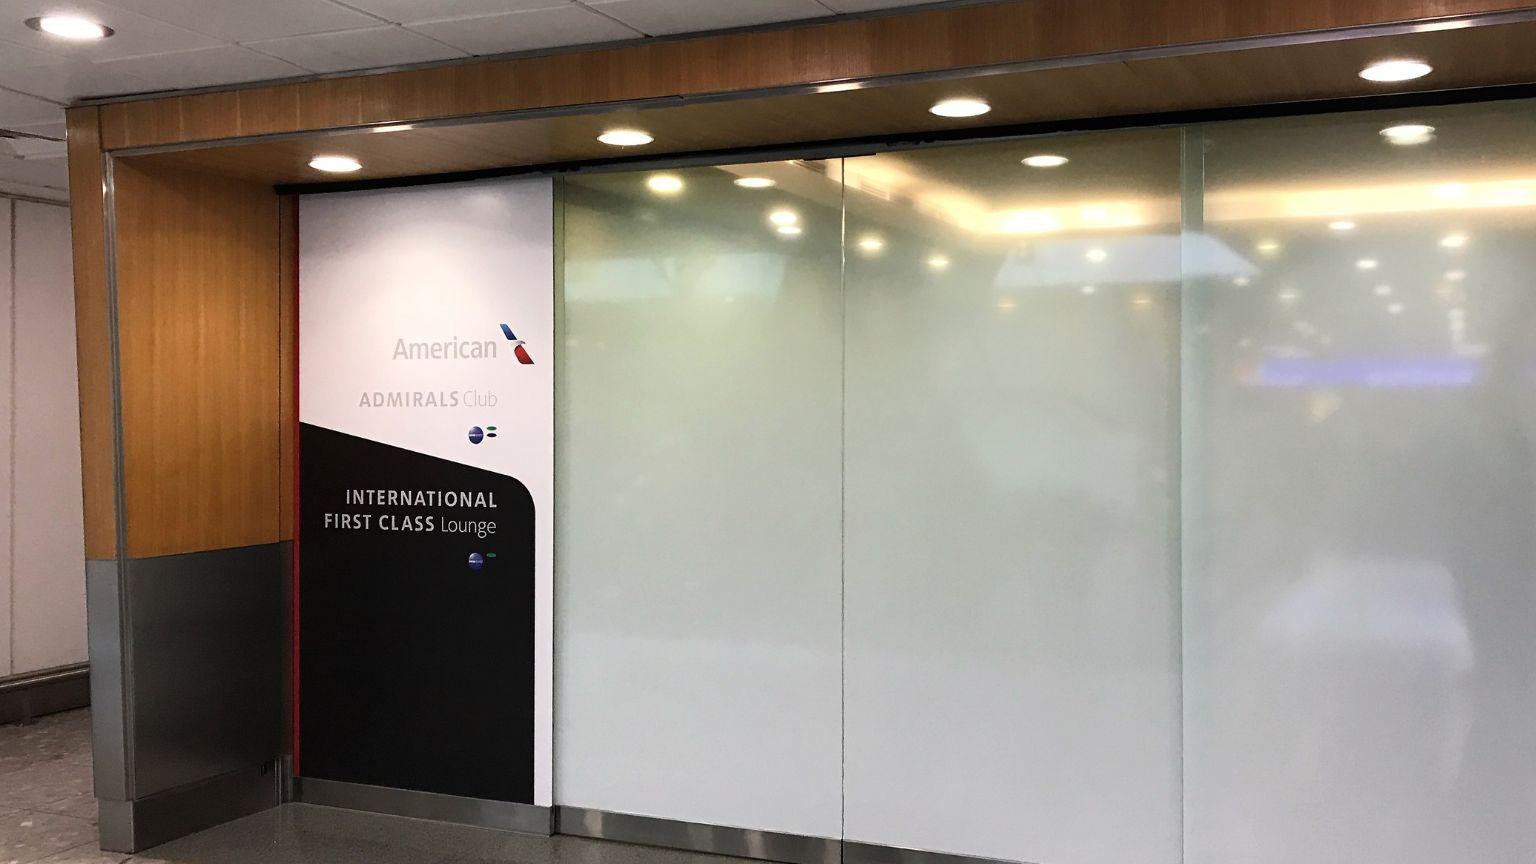 American Airlines Admirals Club Heathrow Lounge, Terminal 3